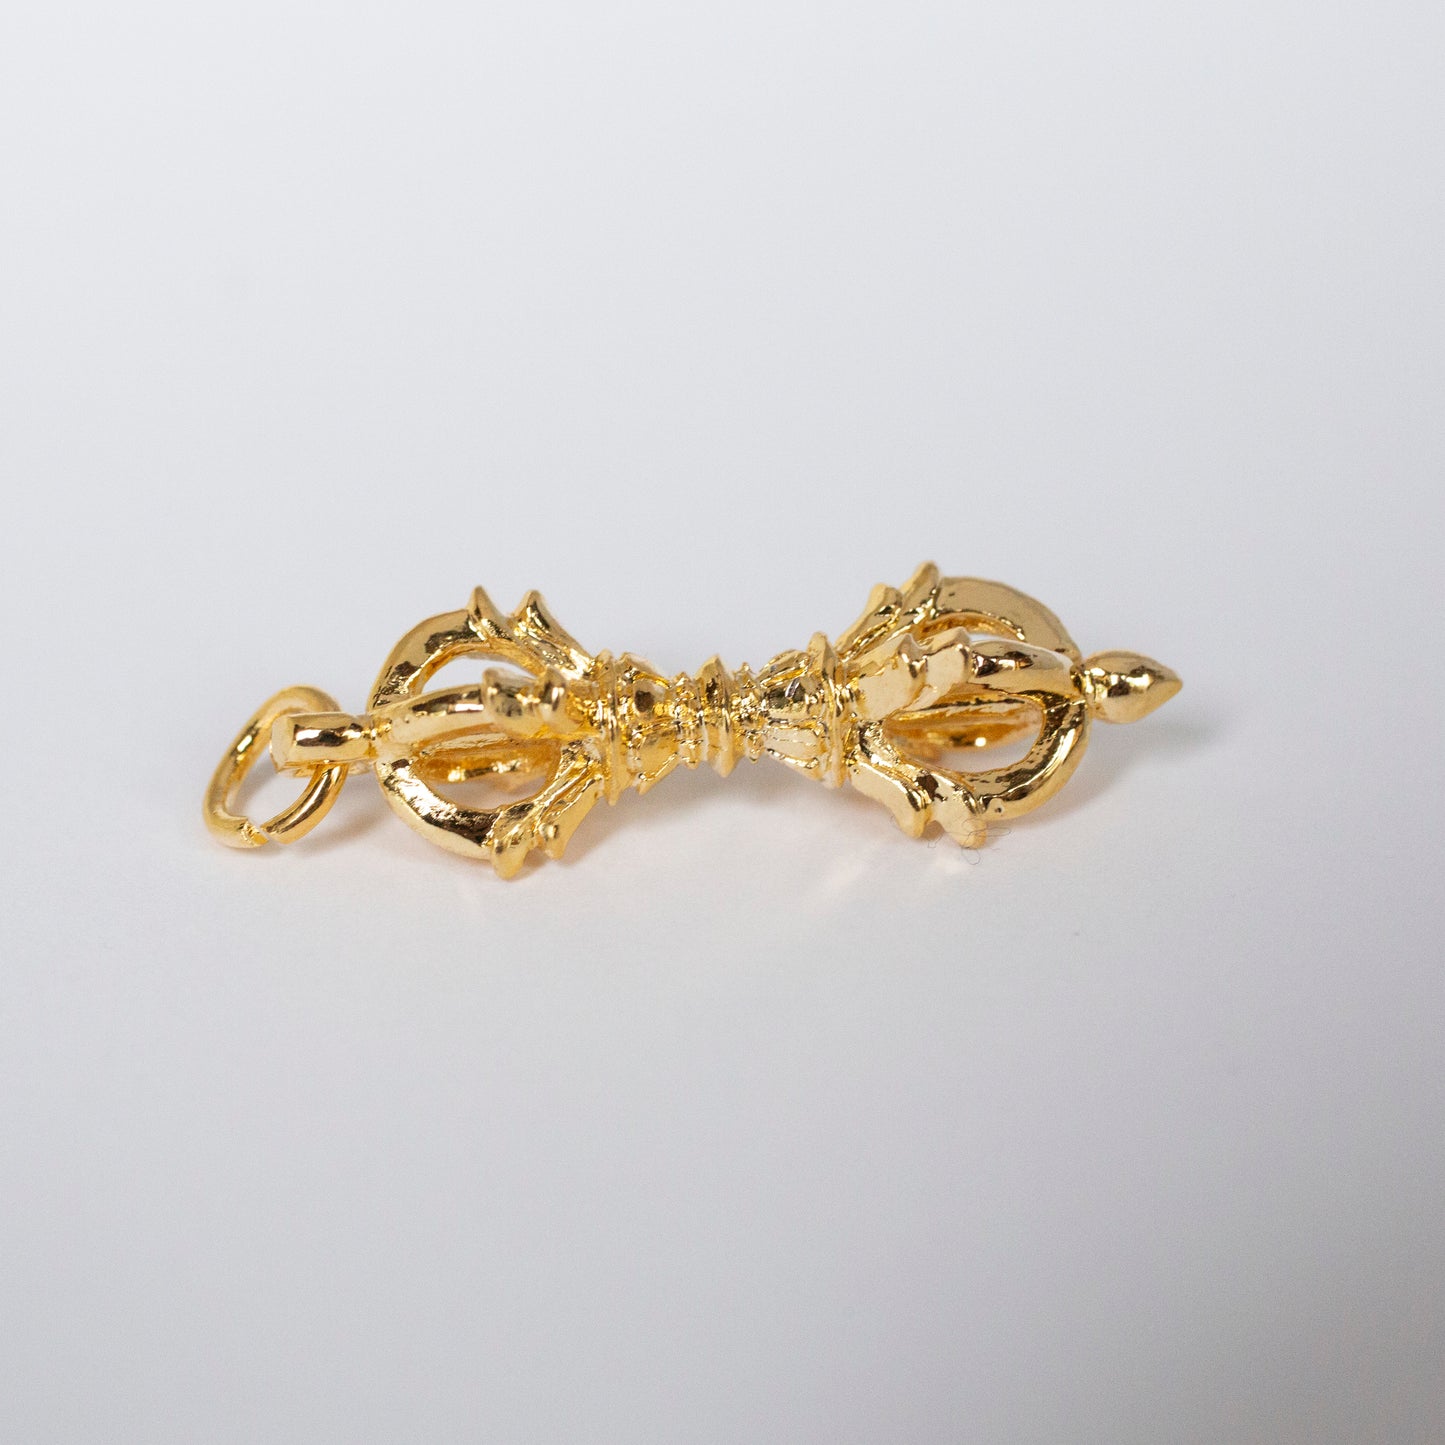 Dorje Vajra *Small* Golden Brass Pendant Necklace